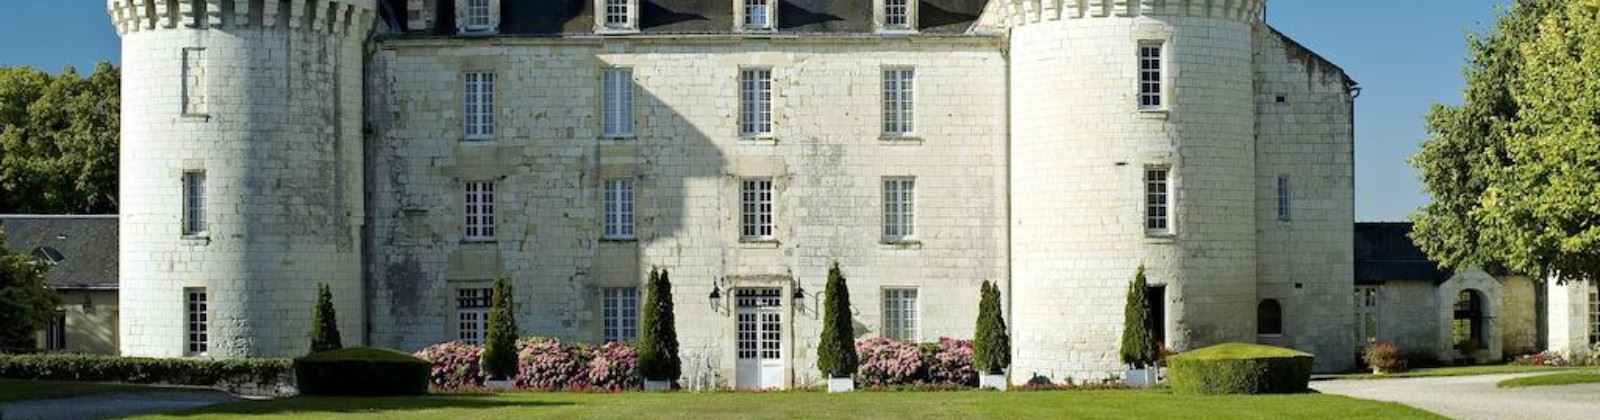 OLEVENE image - chateau-de-marcay-olevene-hotel-restaurant-seminaires-convention-